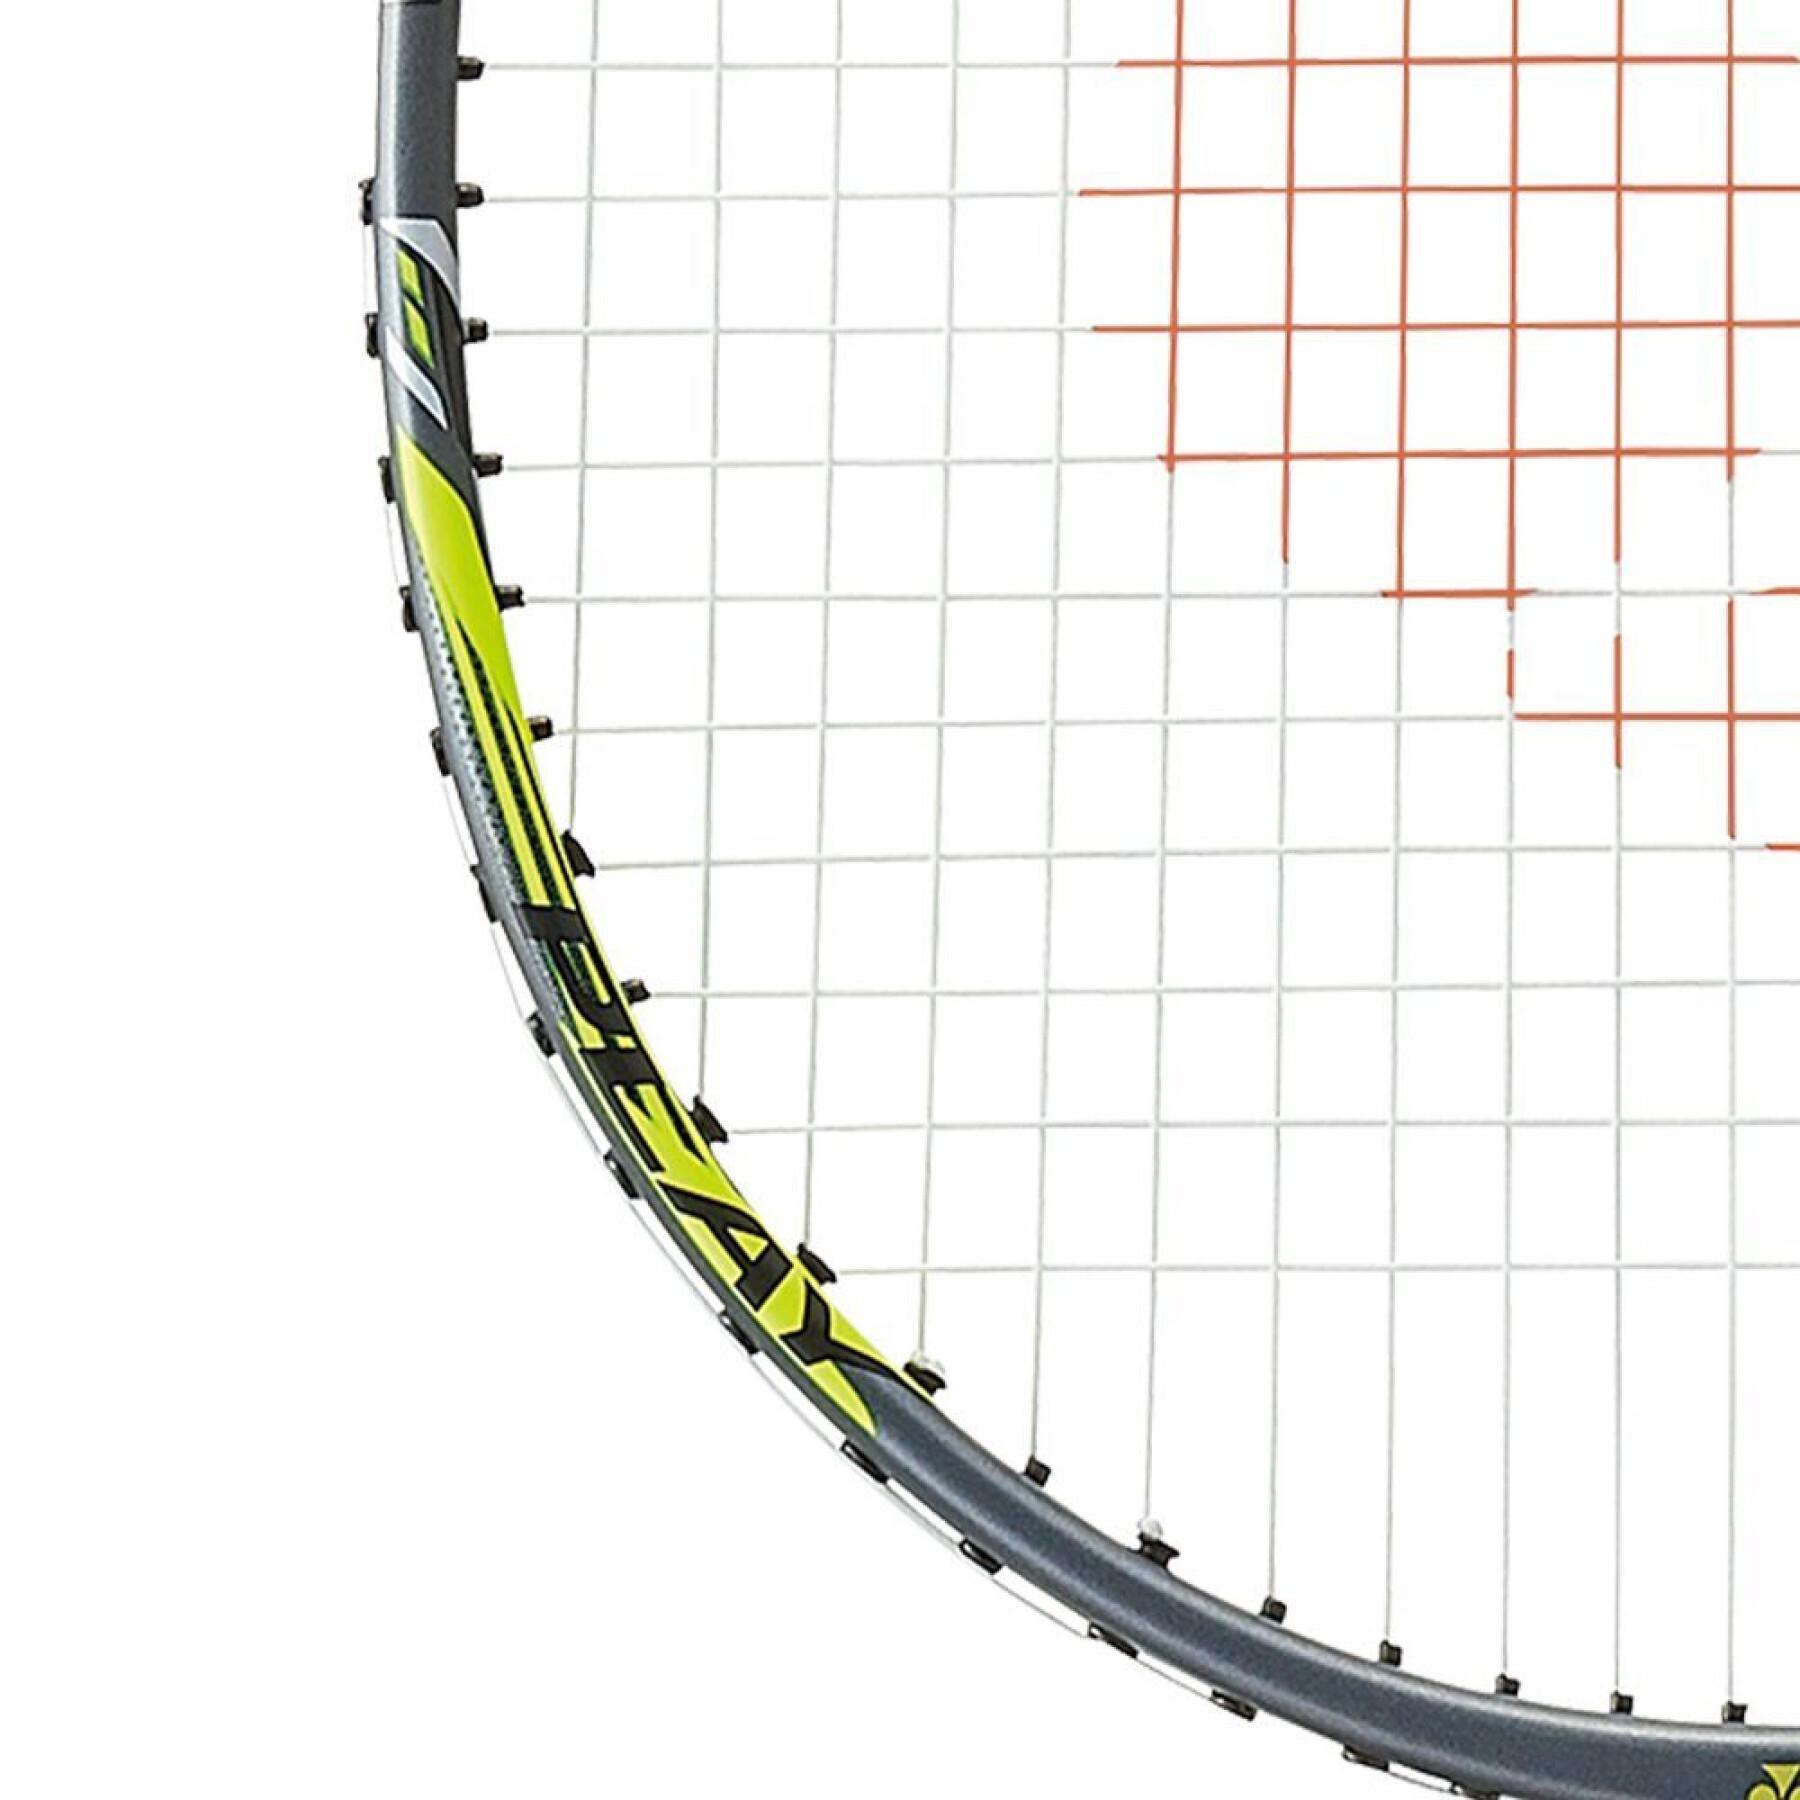 Raquete de Badminton Yonex Arcsaber 7 play 4U5